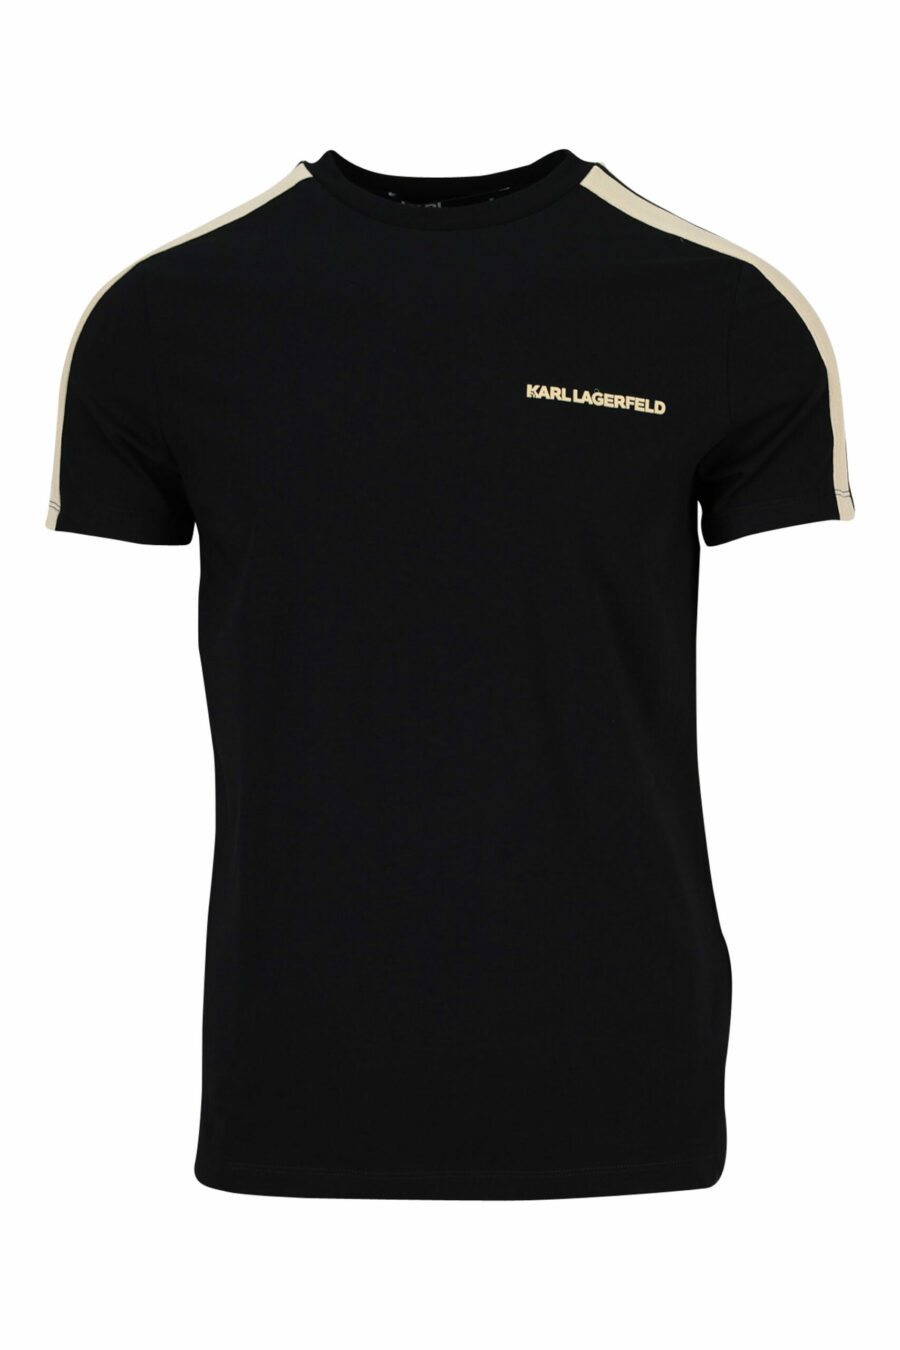 Camiseta negra con minilogo y franjas beige laterales - 4062226401746 scaled